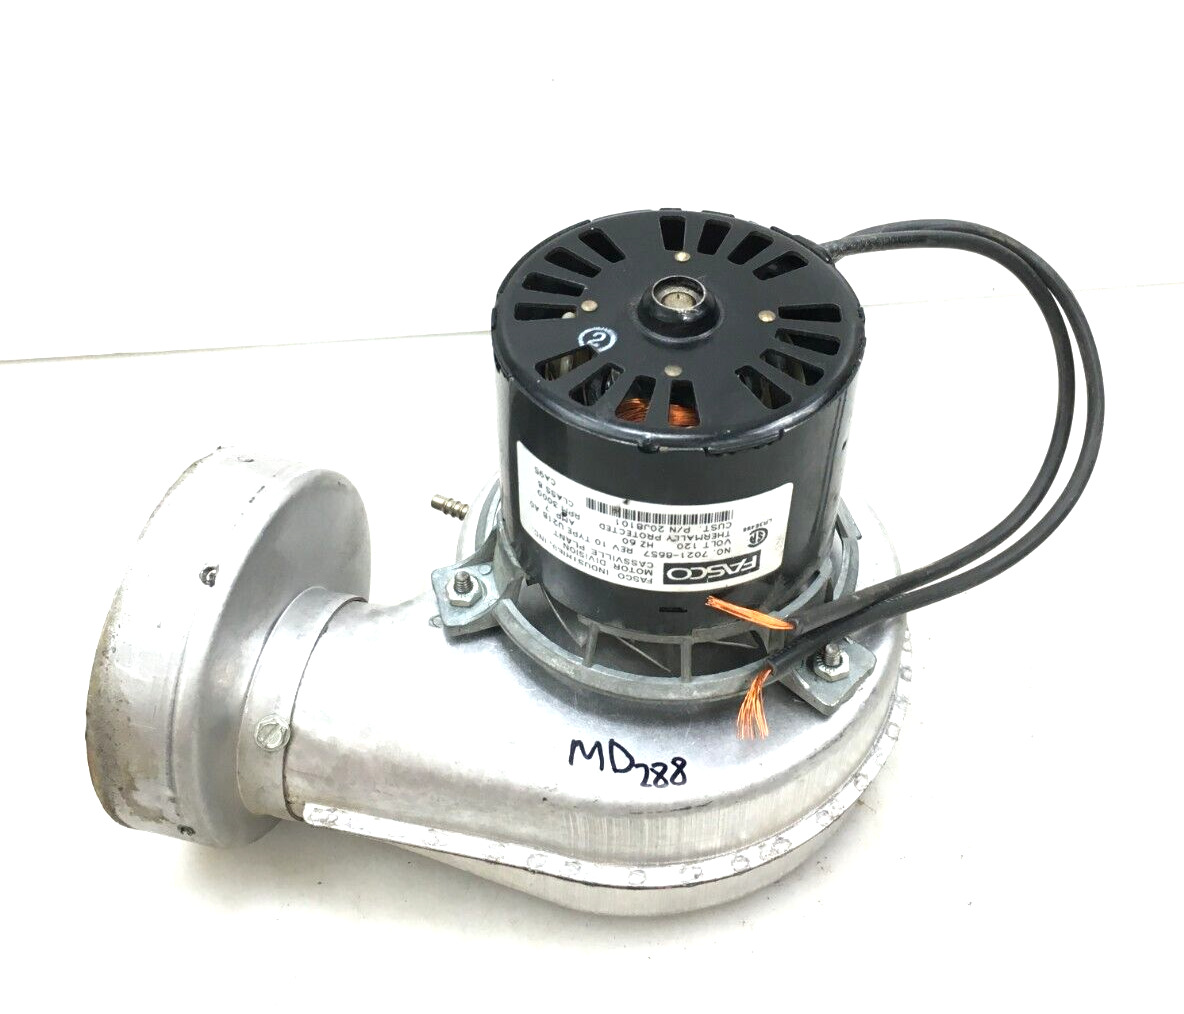 FASCO 7021-8657 Draft Inducer Blower Motor 20J8101 120V 3000 RPM used  #MD288